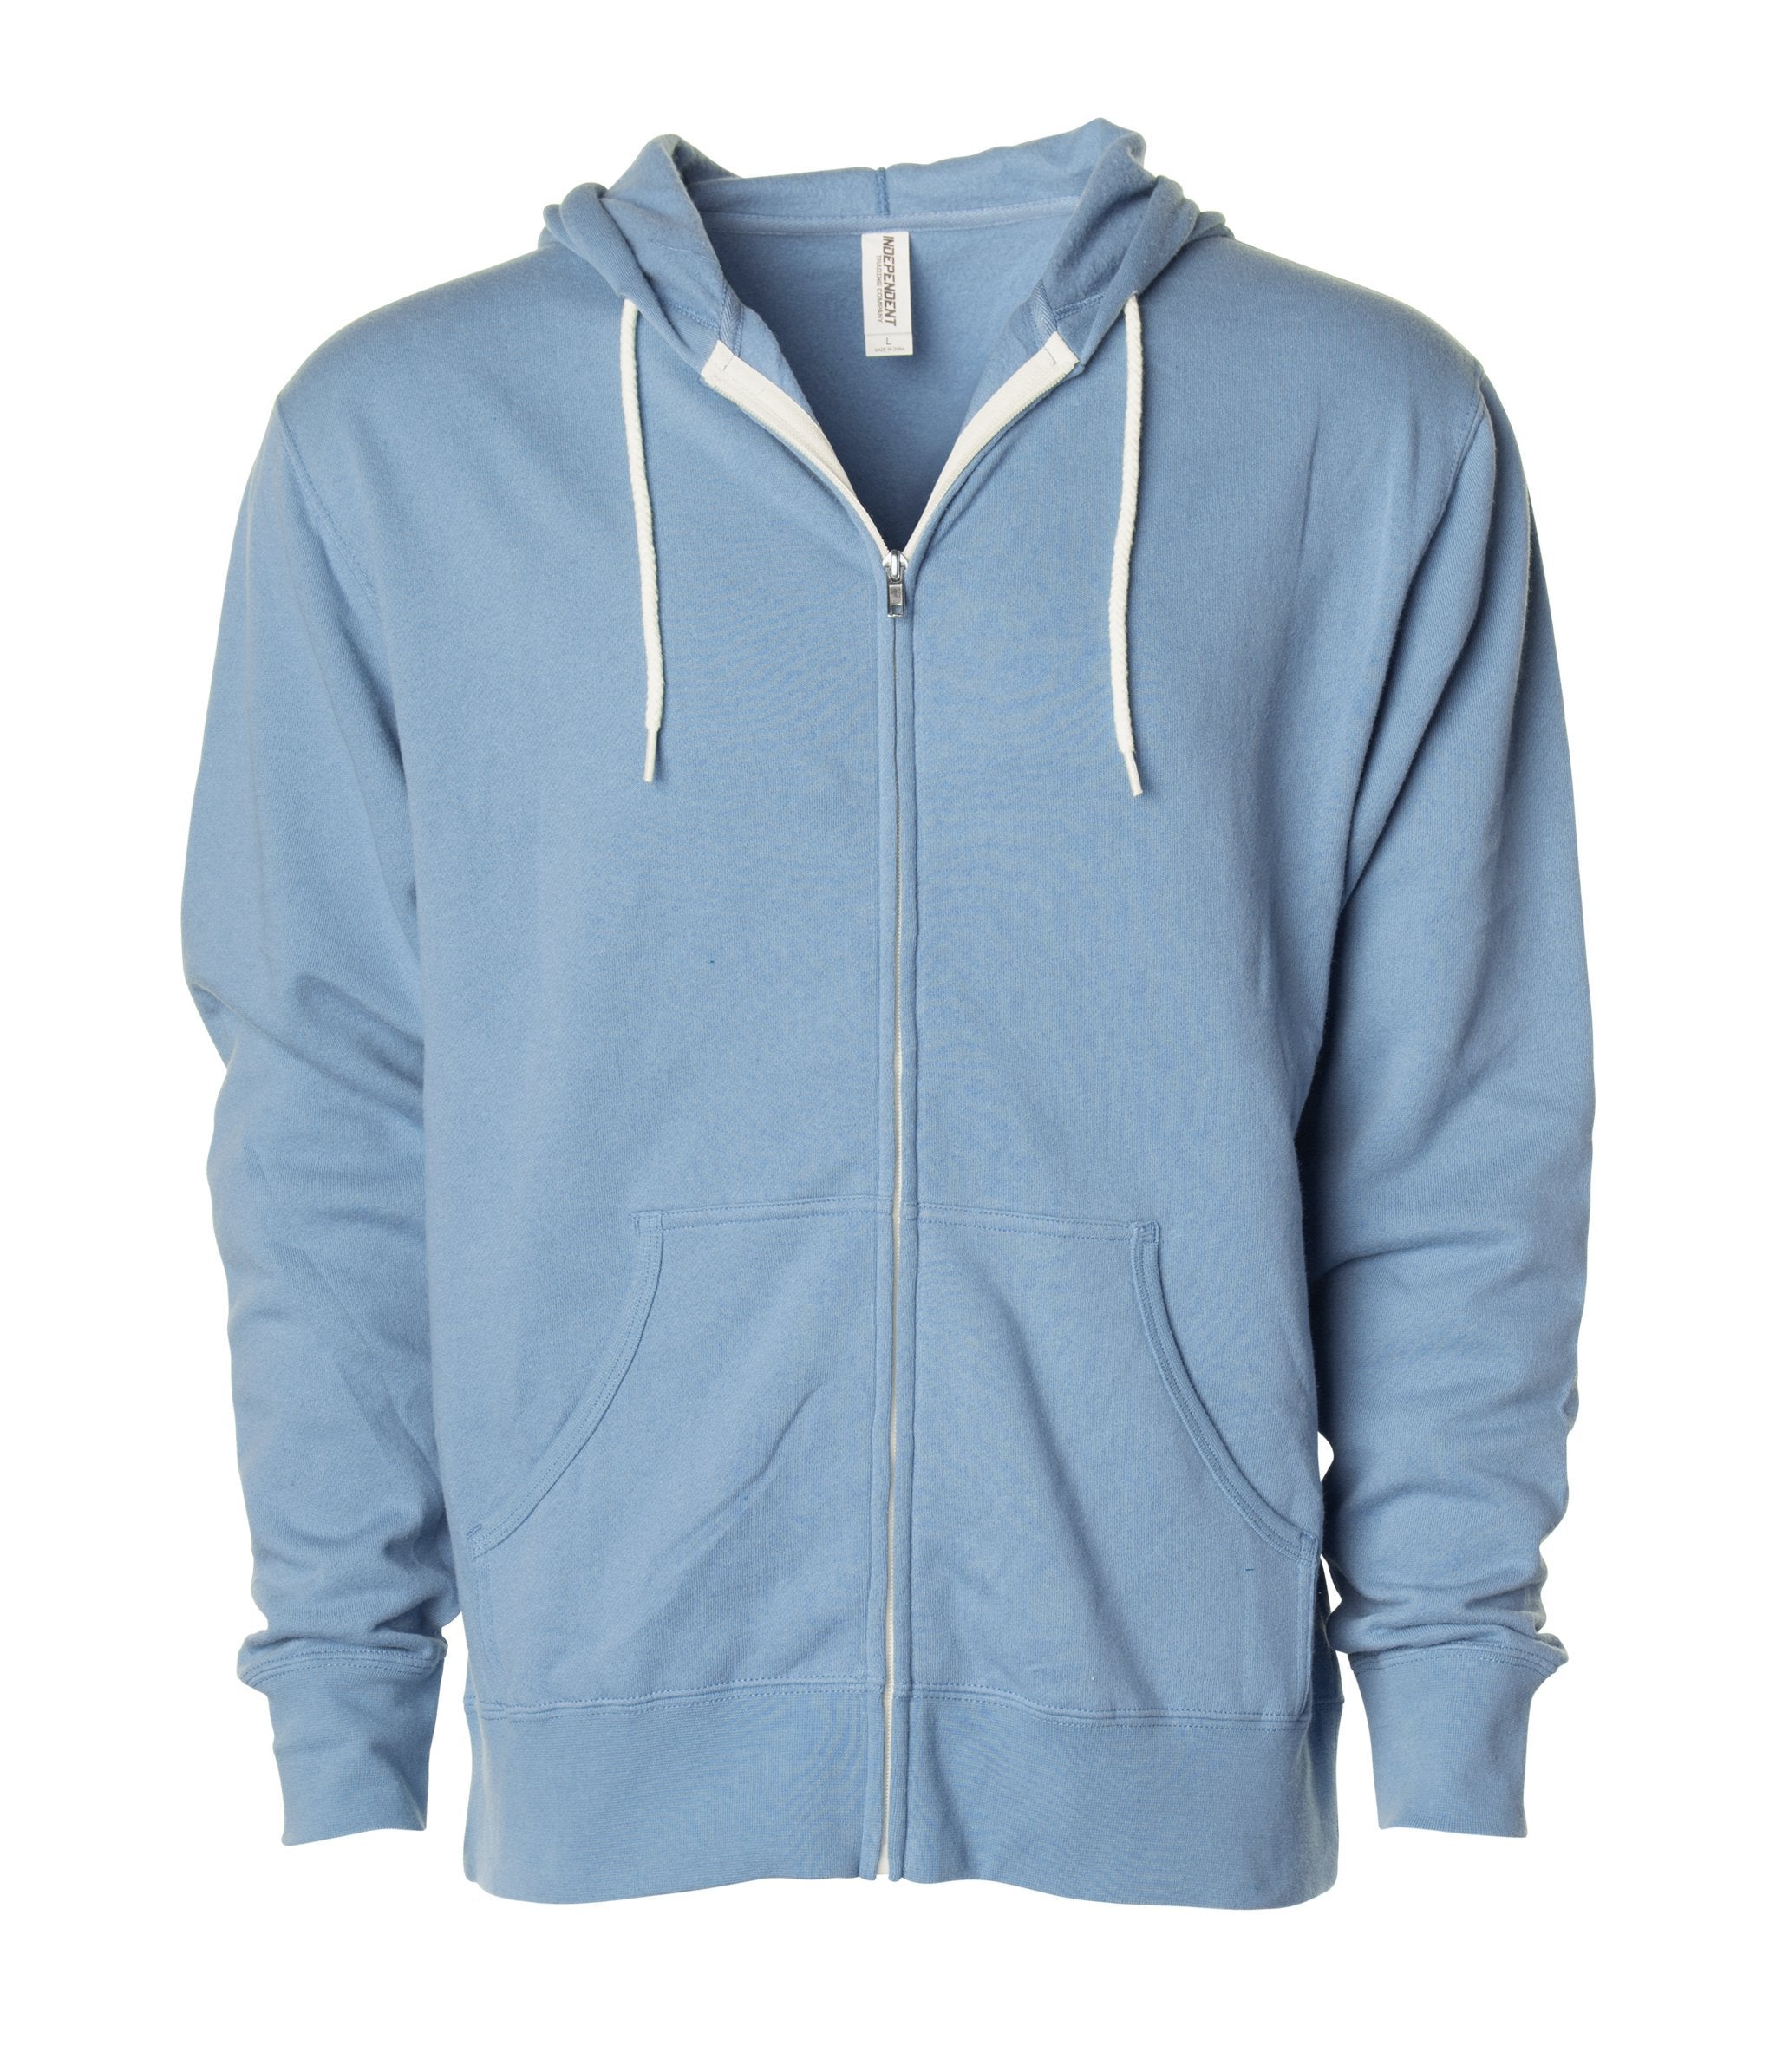 Independent Trading Co. AFX90UNZ - unisex Full-Zip Hooded Sweatshirt Classic Navy - XS